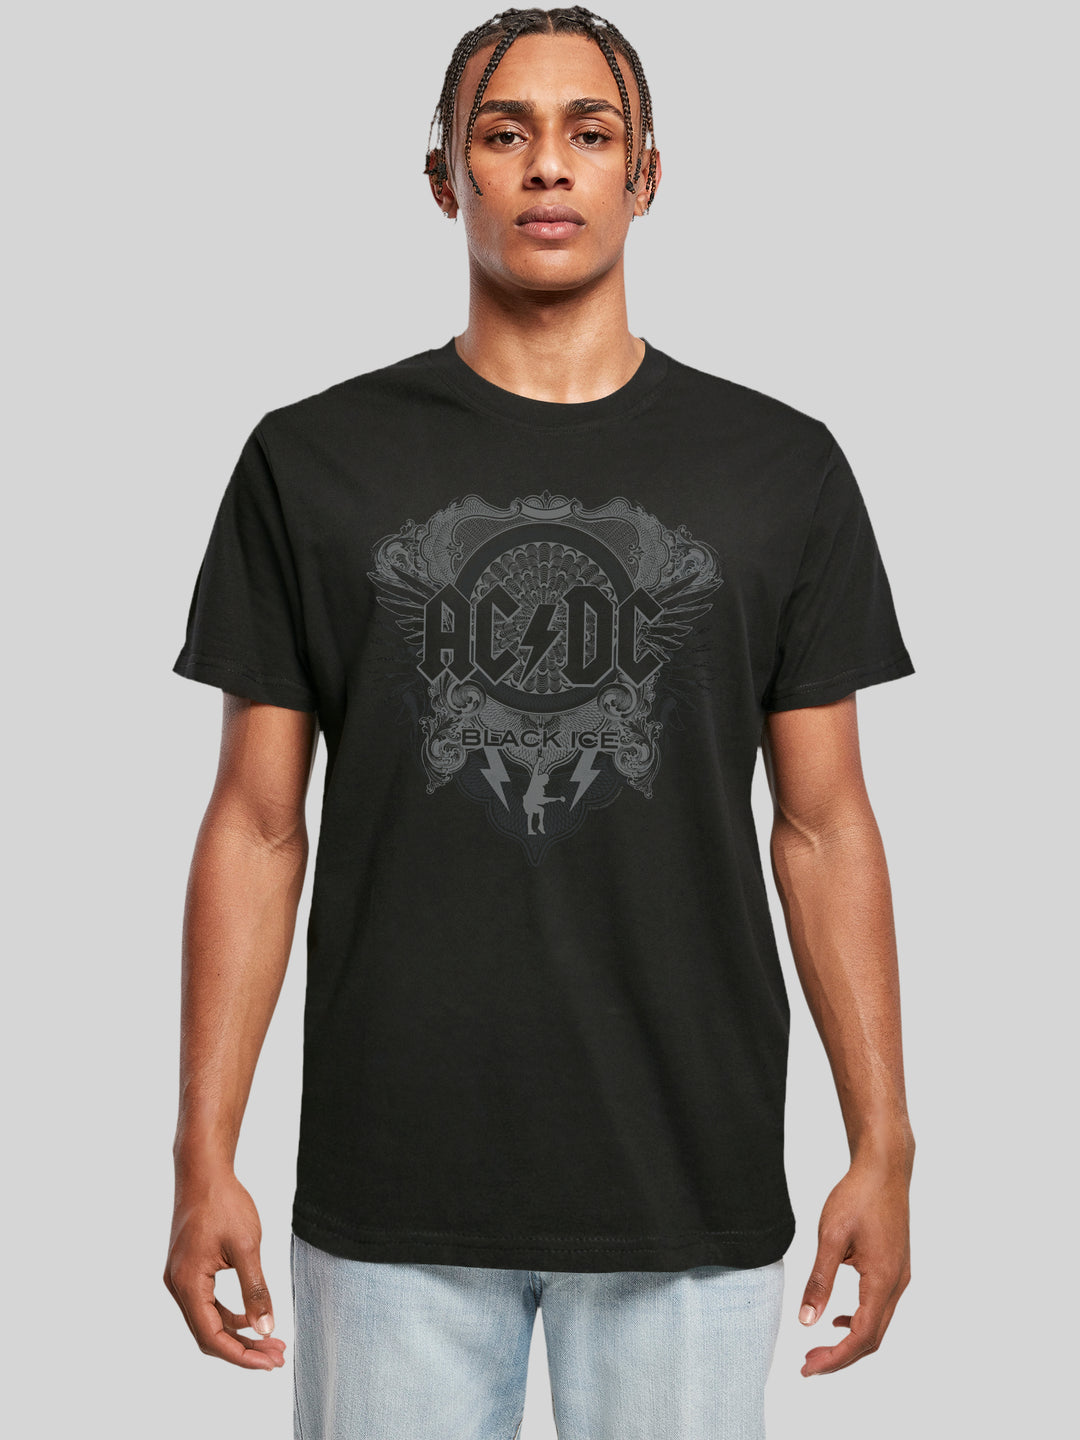 AC/DC Black Ice Round Neck T-Shirt - Showcase Your Rock Spirit in Comfort & Style